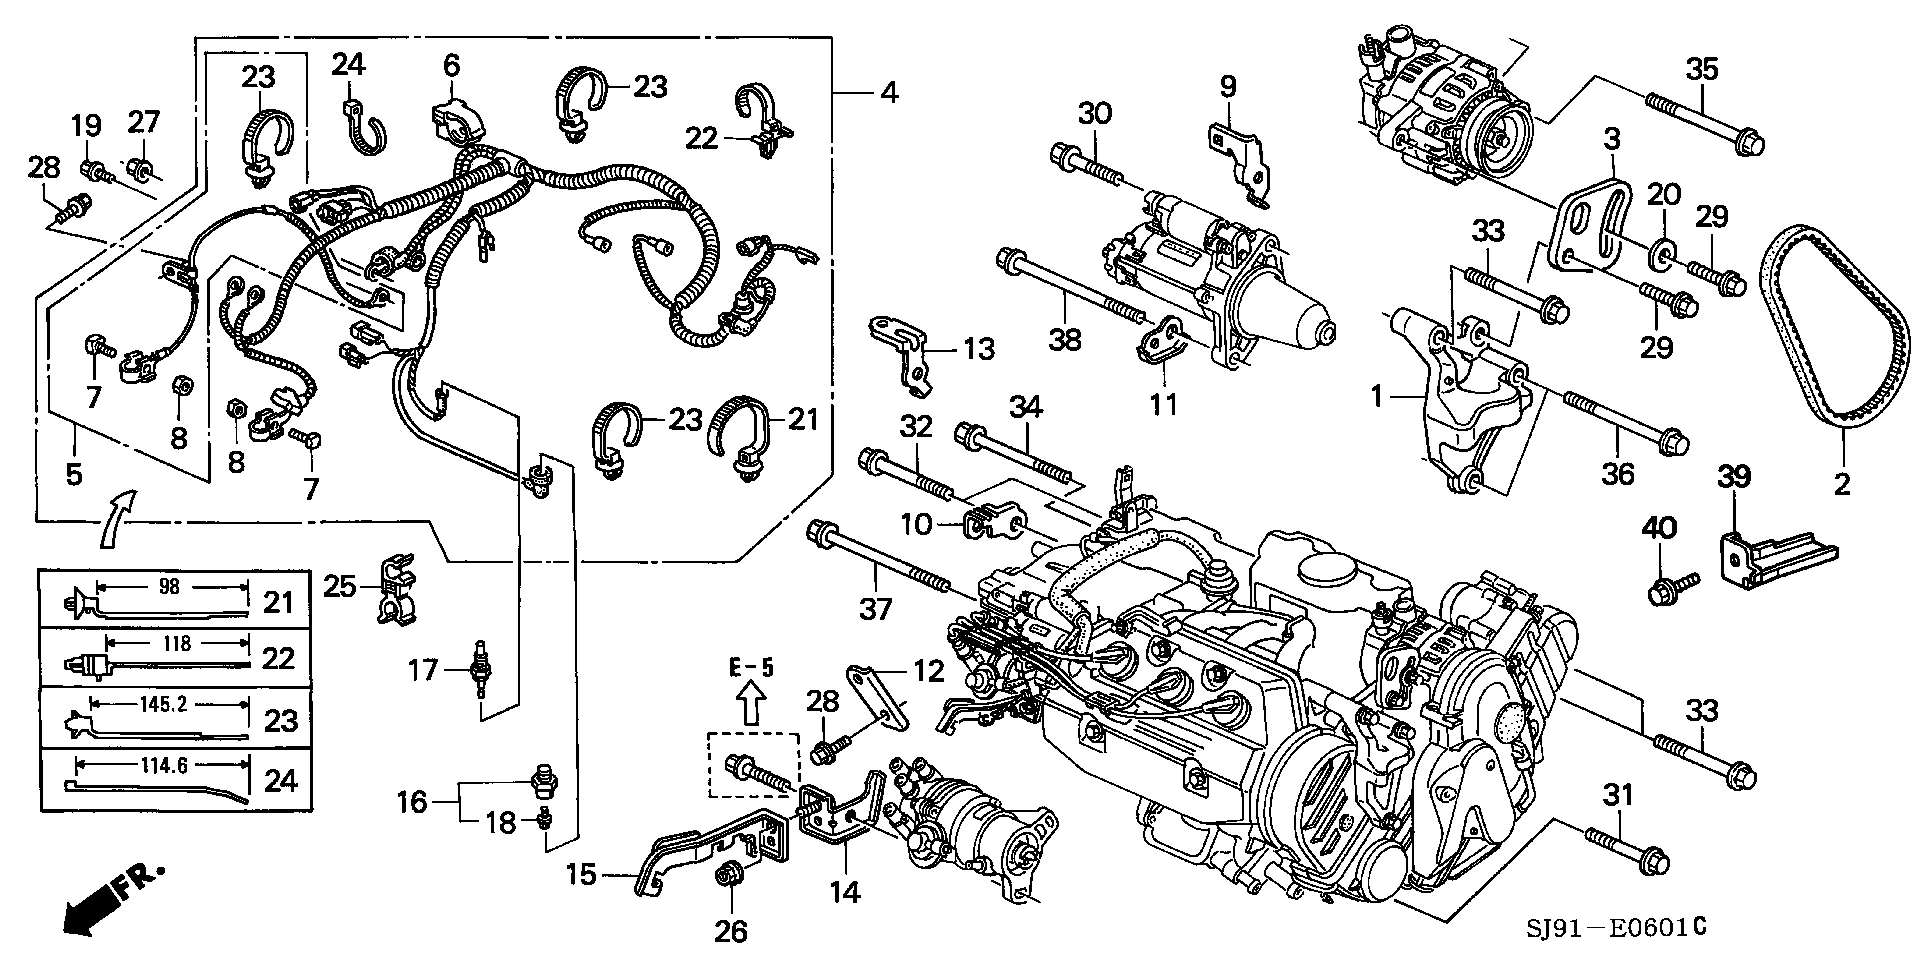 ENGINE WIRE HARNESS( CARBURETOR) (210)